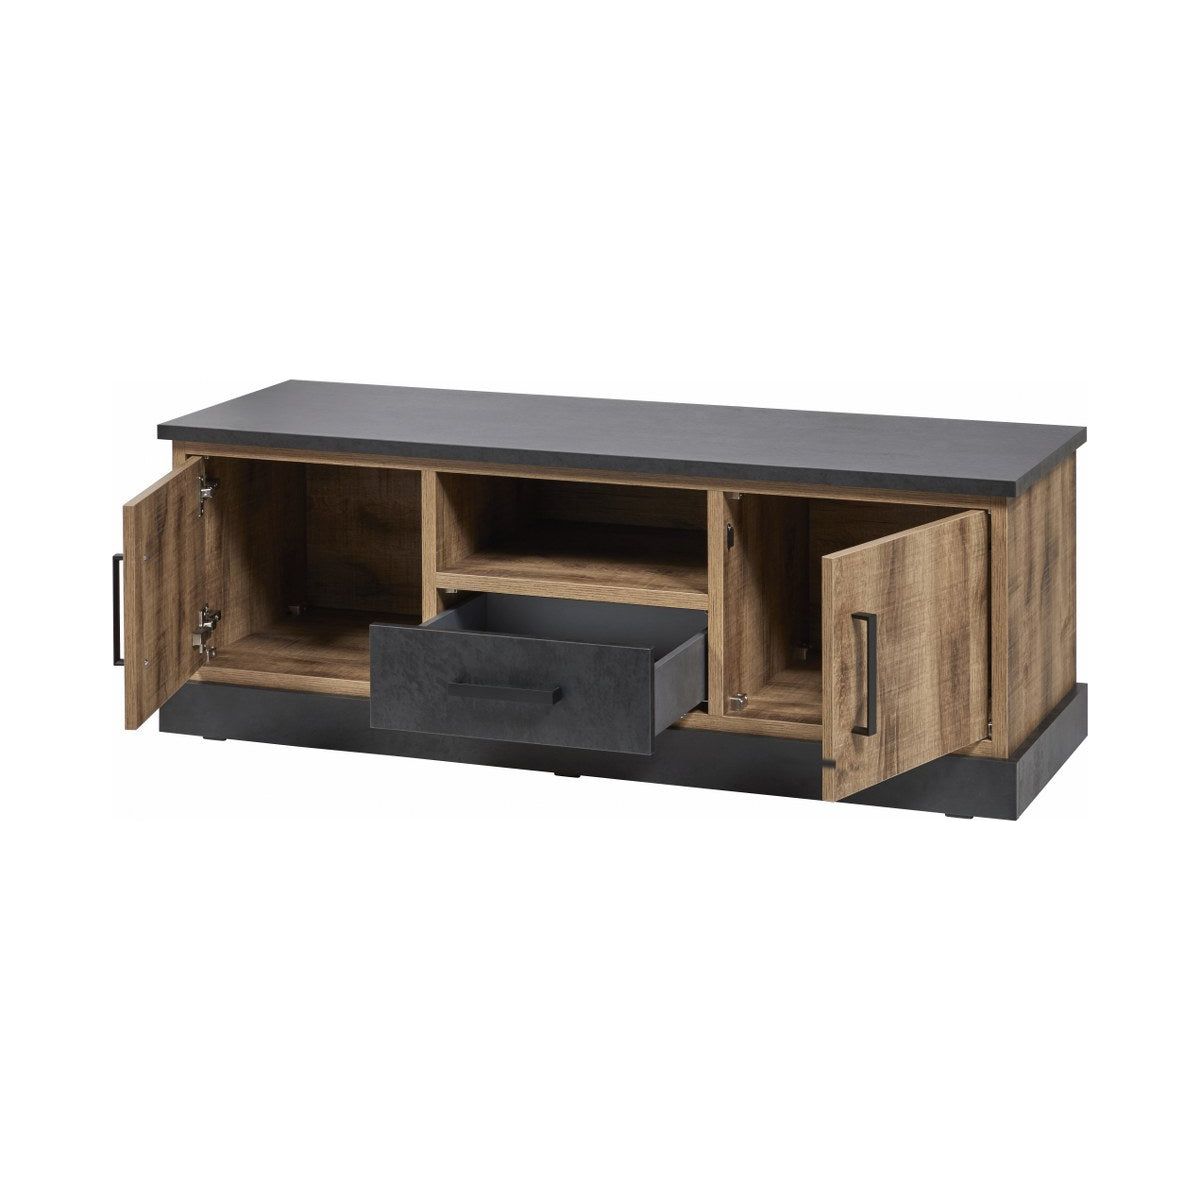 TV cabinet | Furniture series Cologne | brown, natural, black | 142